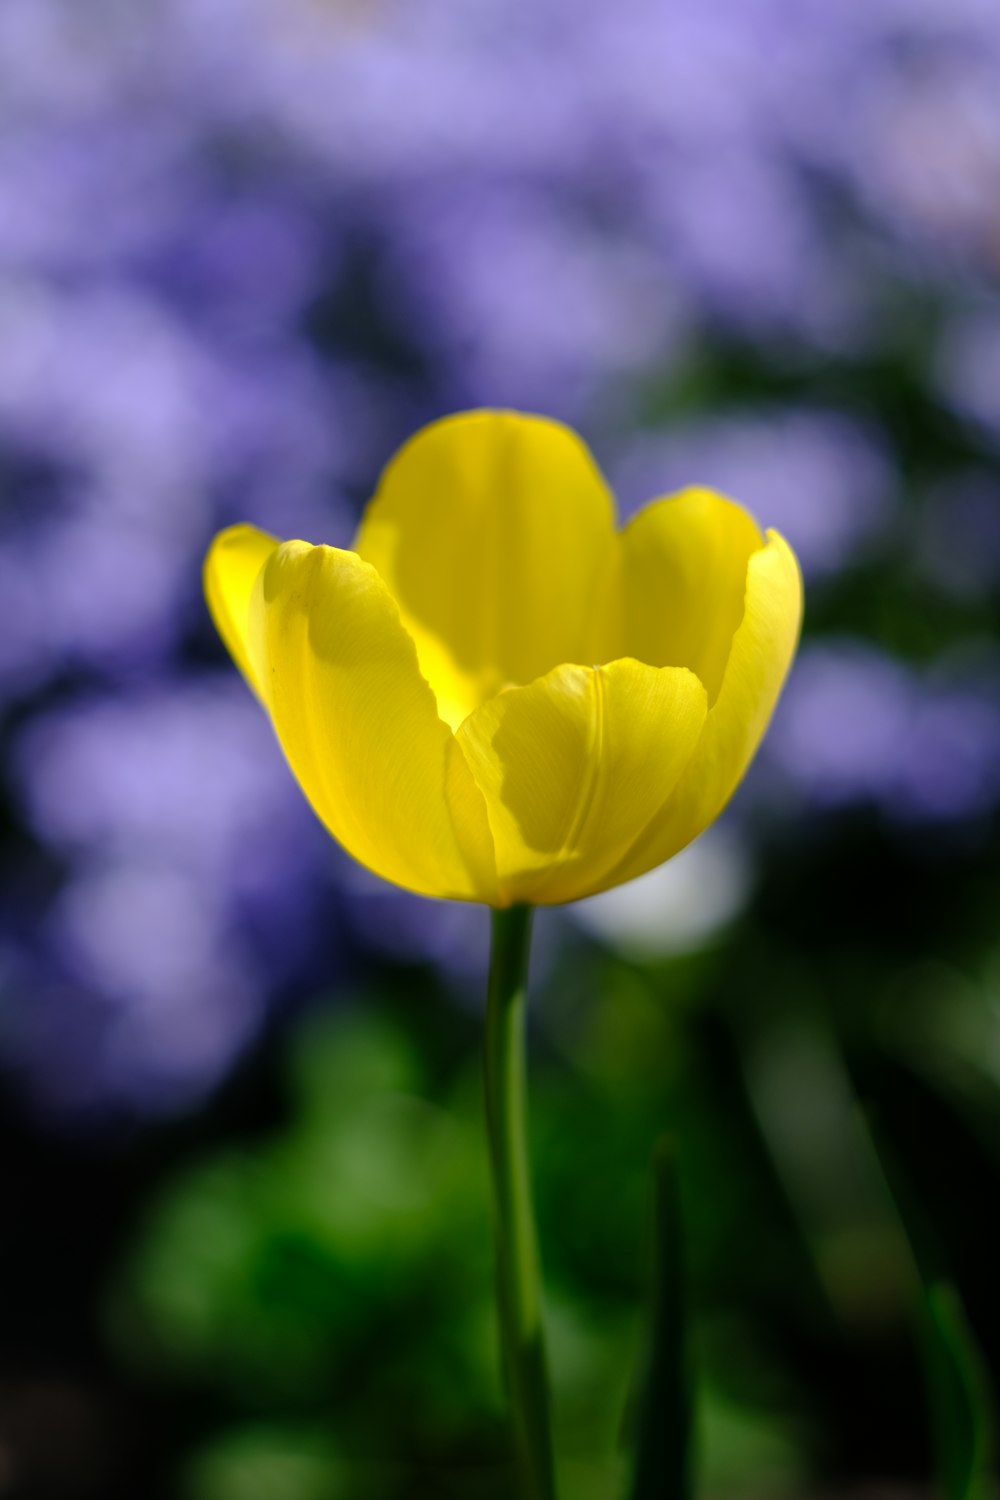 a single yellow flower in front of purple flowers